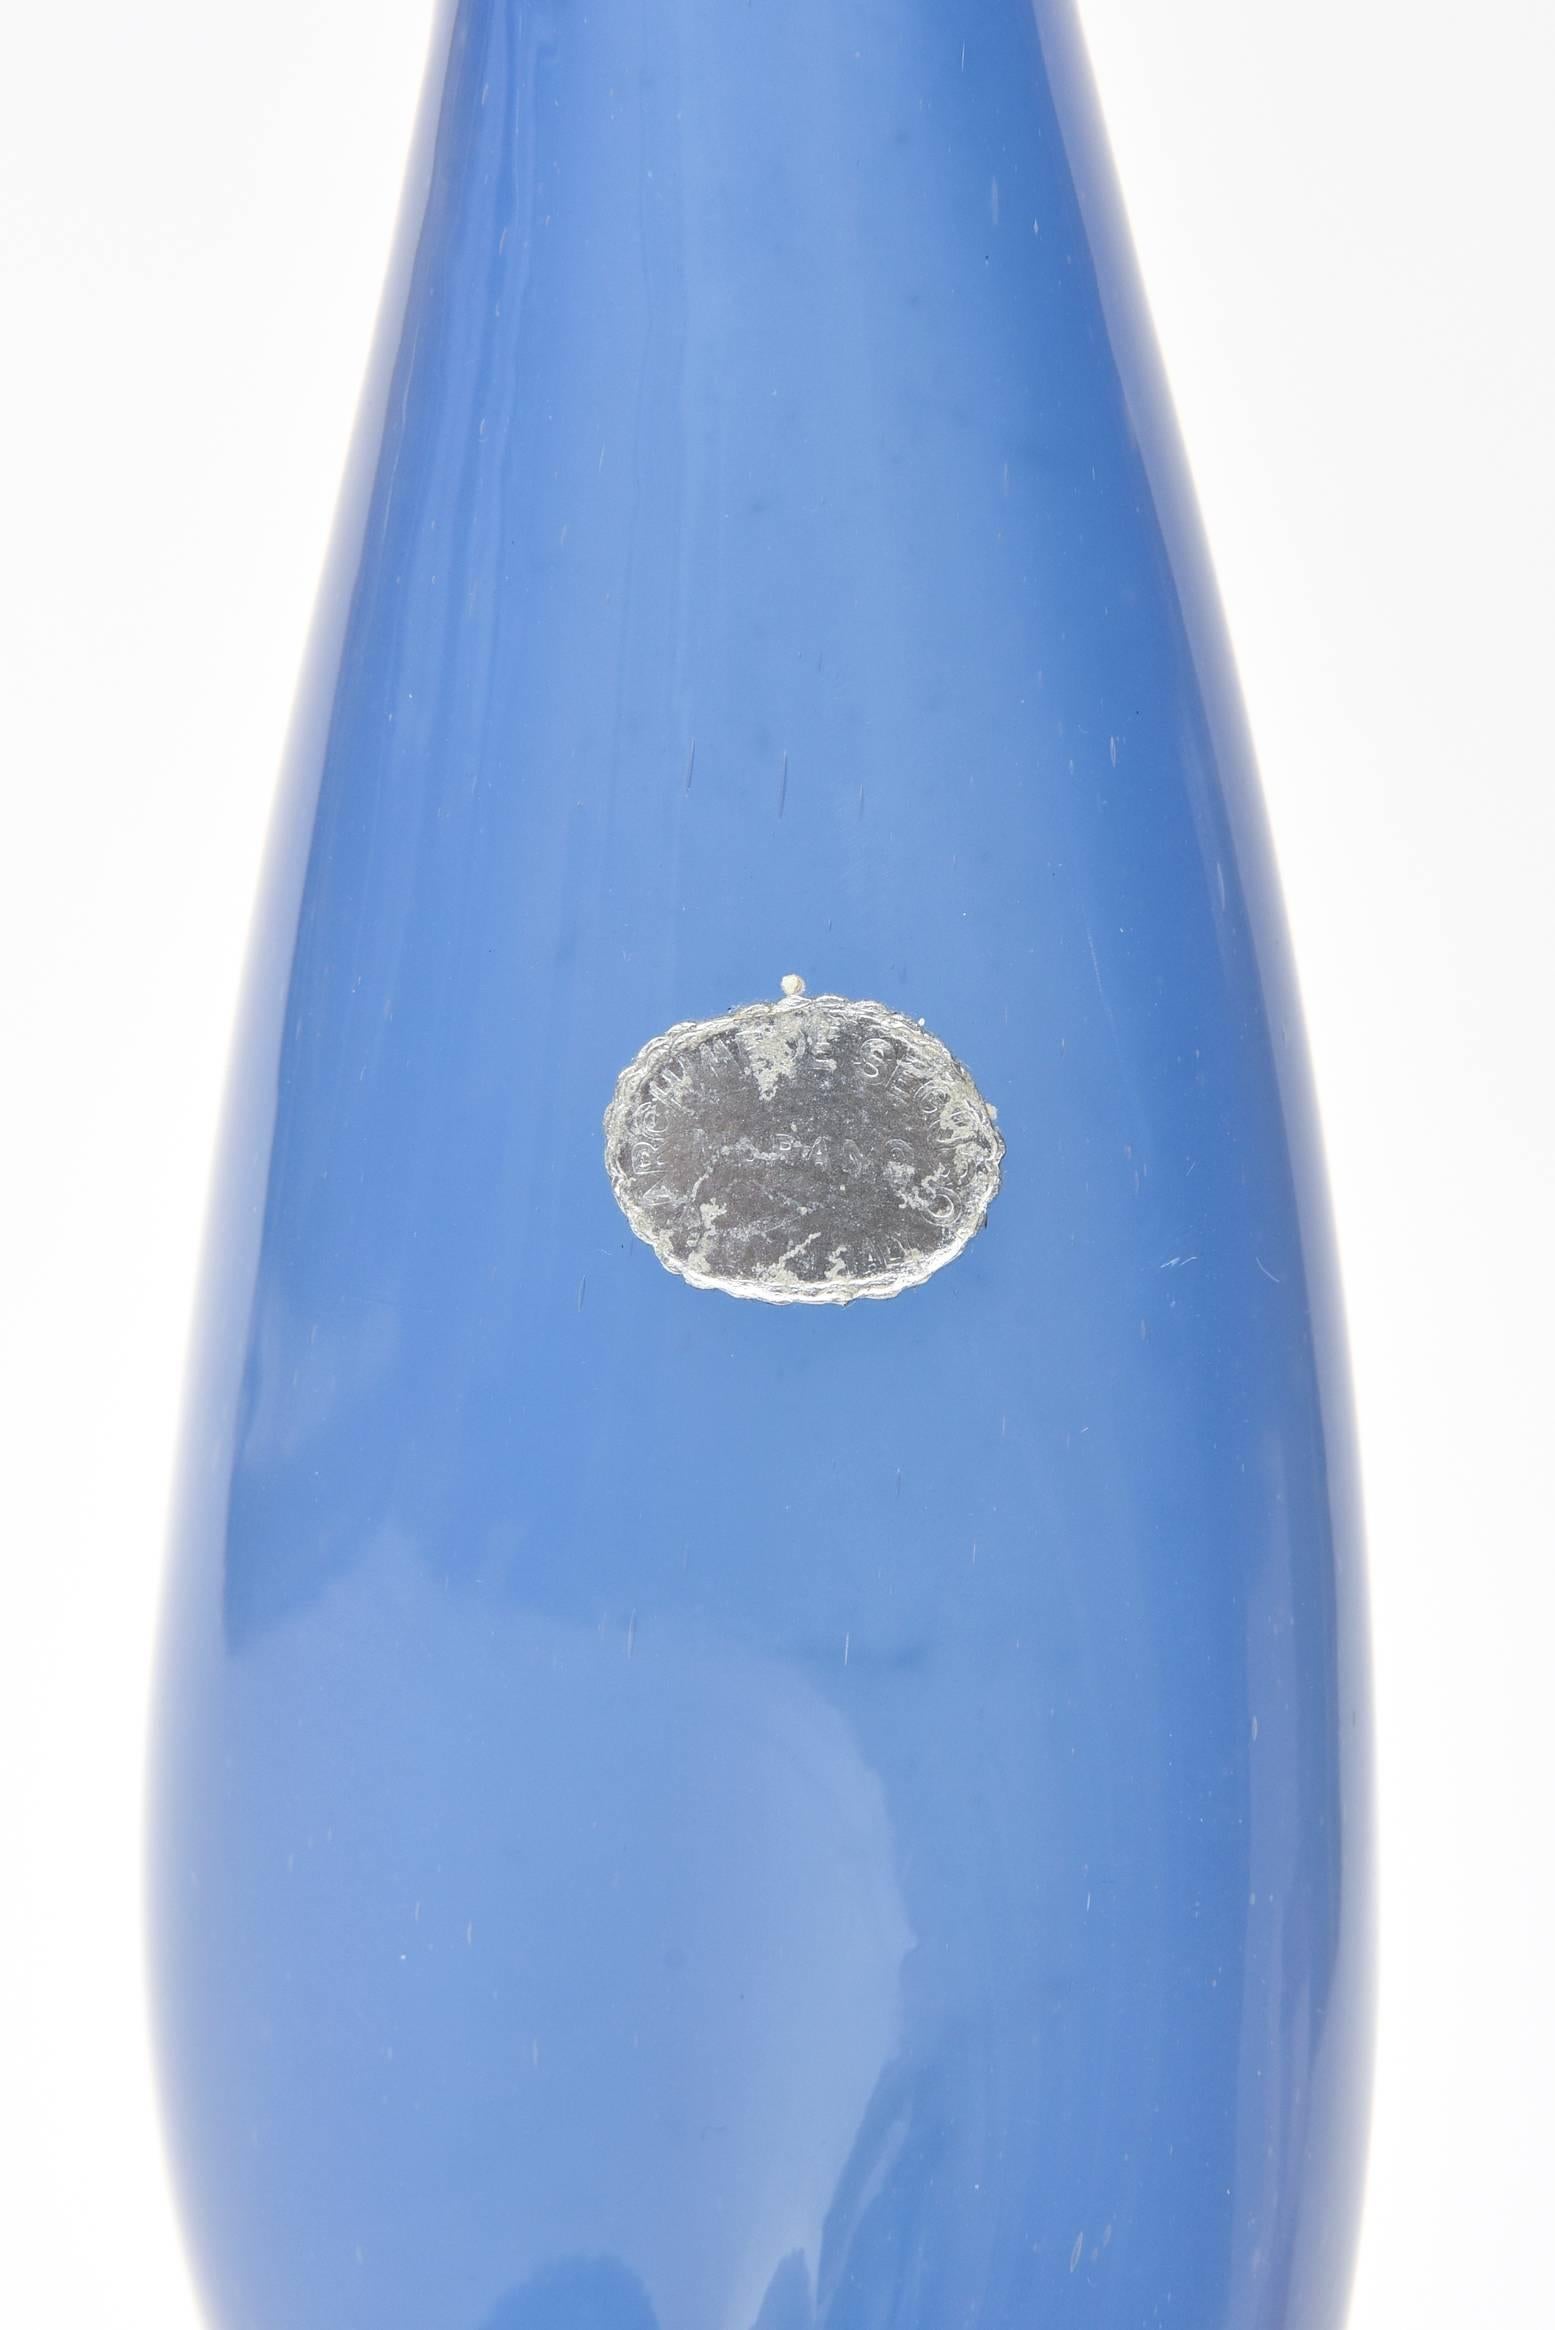 Blown Glass Italian Murano Midcentury Seguso Decanter Bottle with Original Stopper